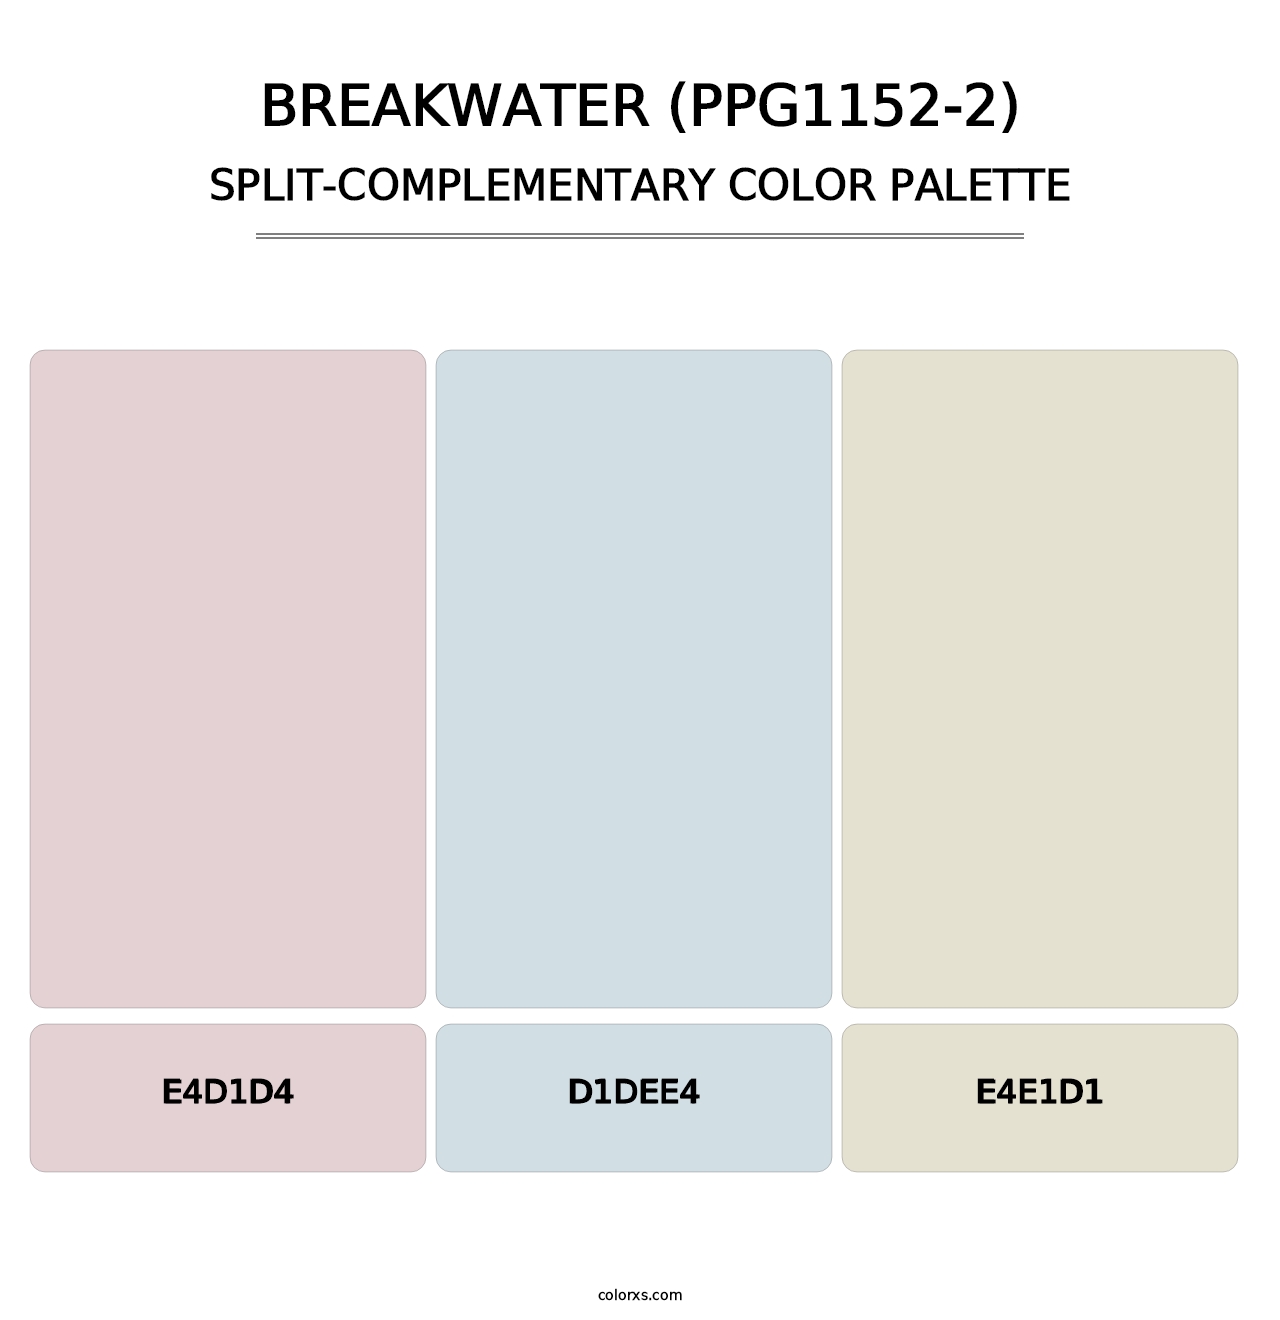 Breakwater (PPG1152-2) - Split-Complementary Color Palette